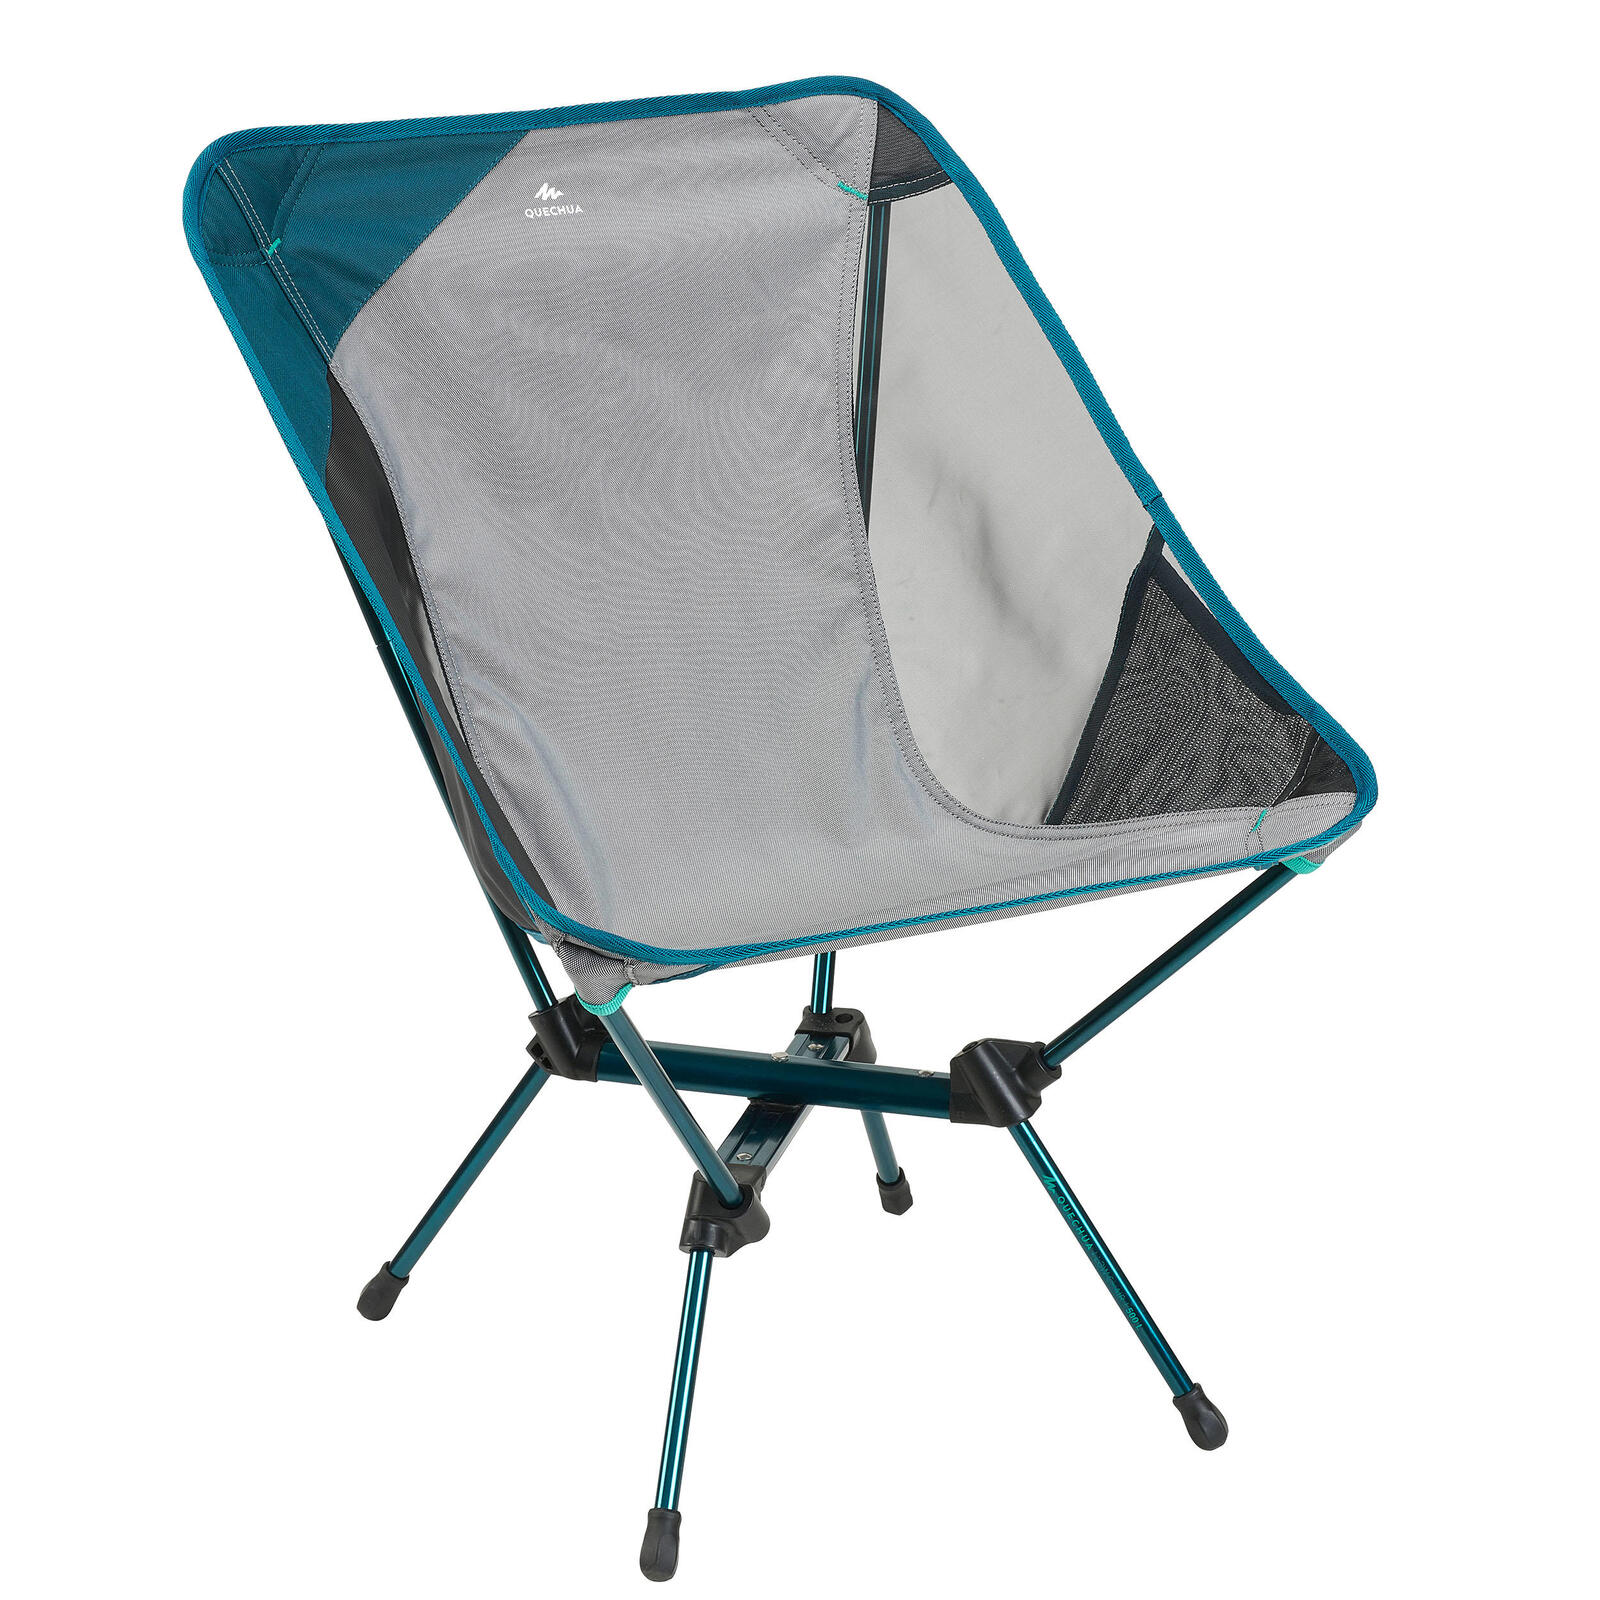 Compact folding chair